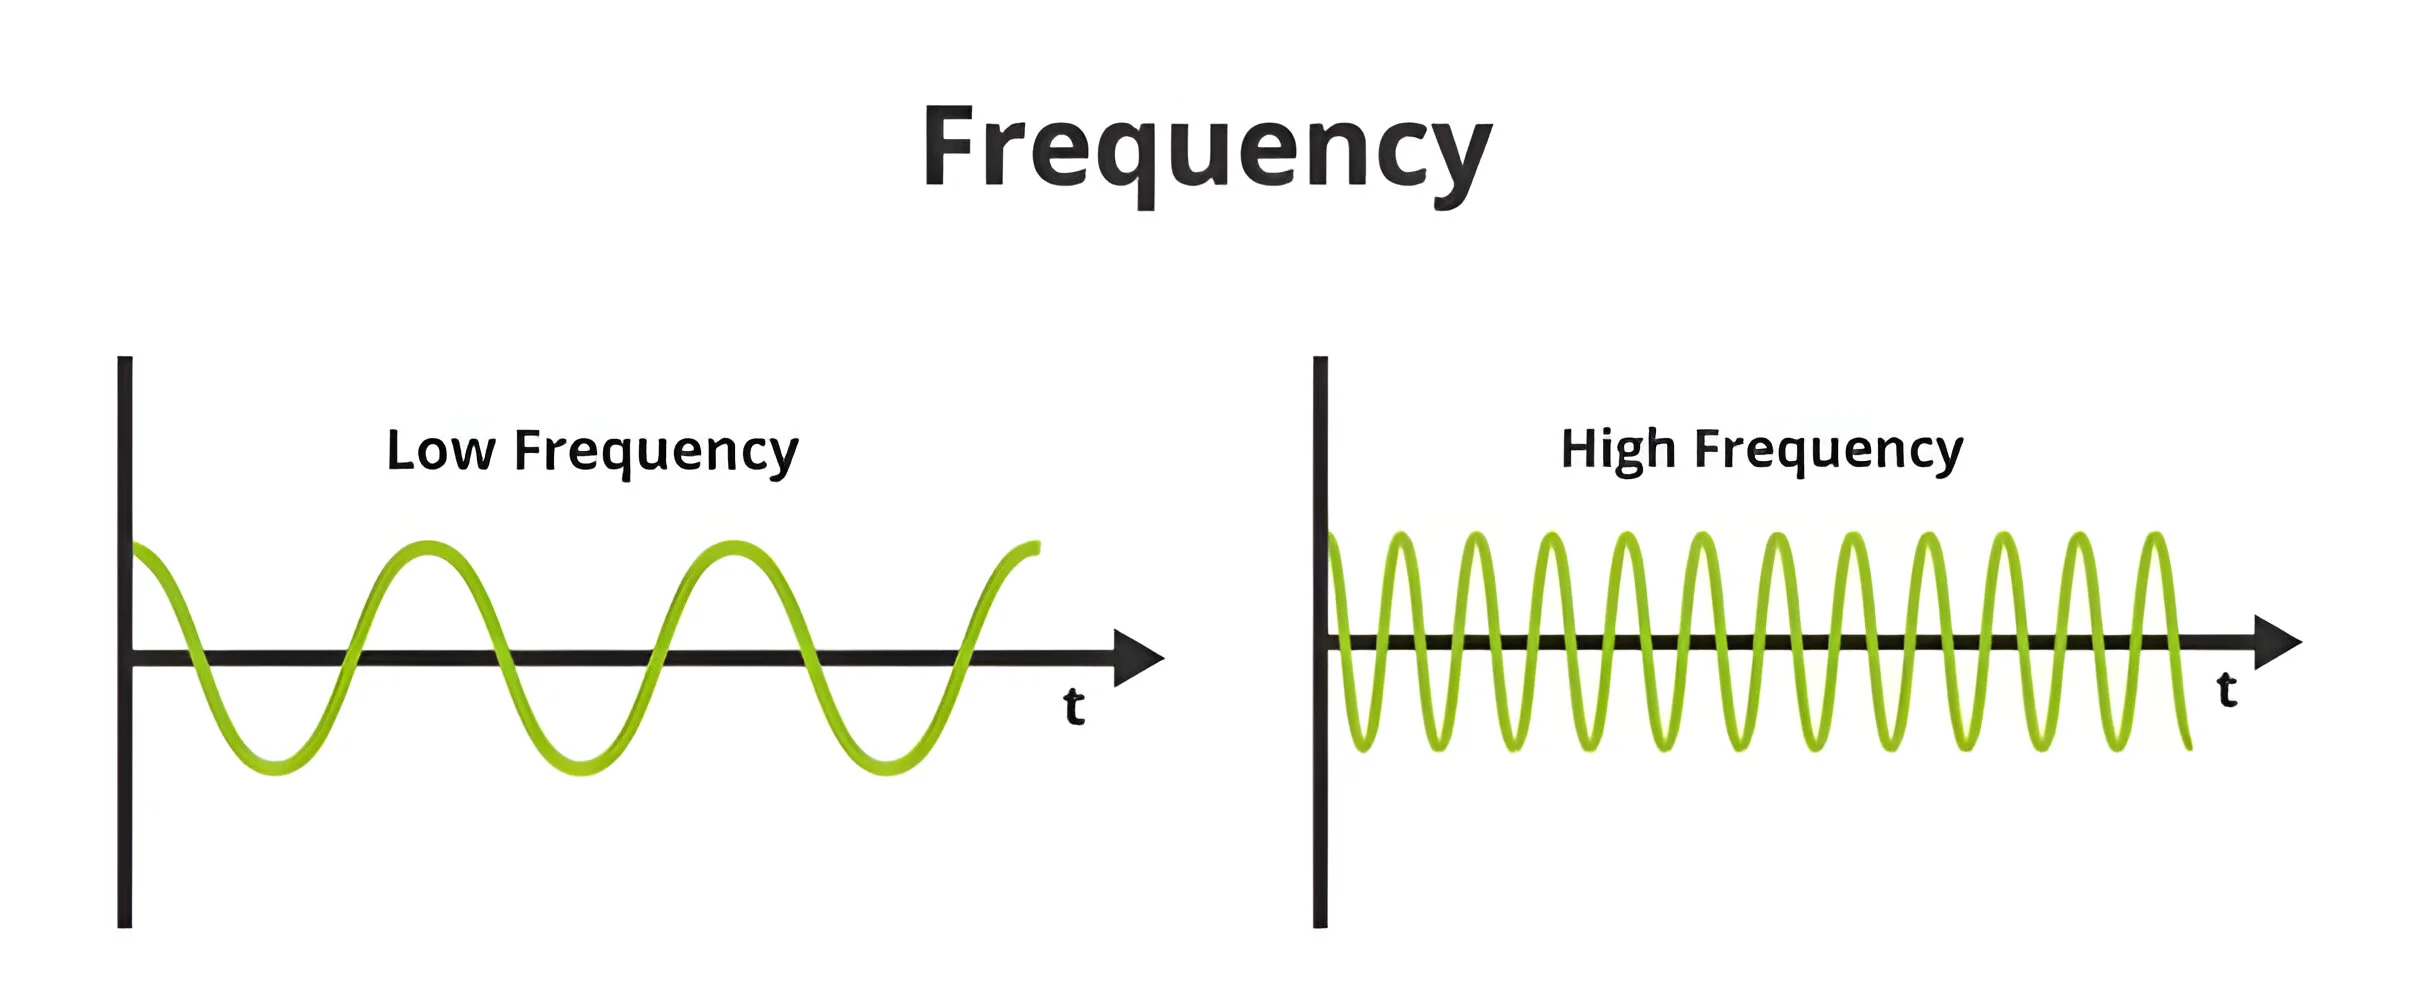 فرکانس طبیعی (Natural Frequency) یک سیستم ارتعاشاتی